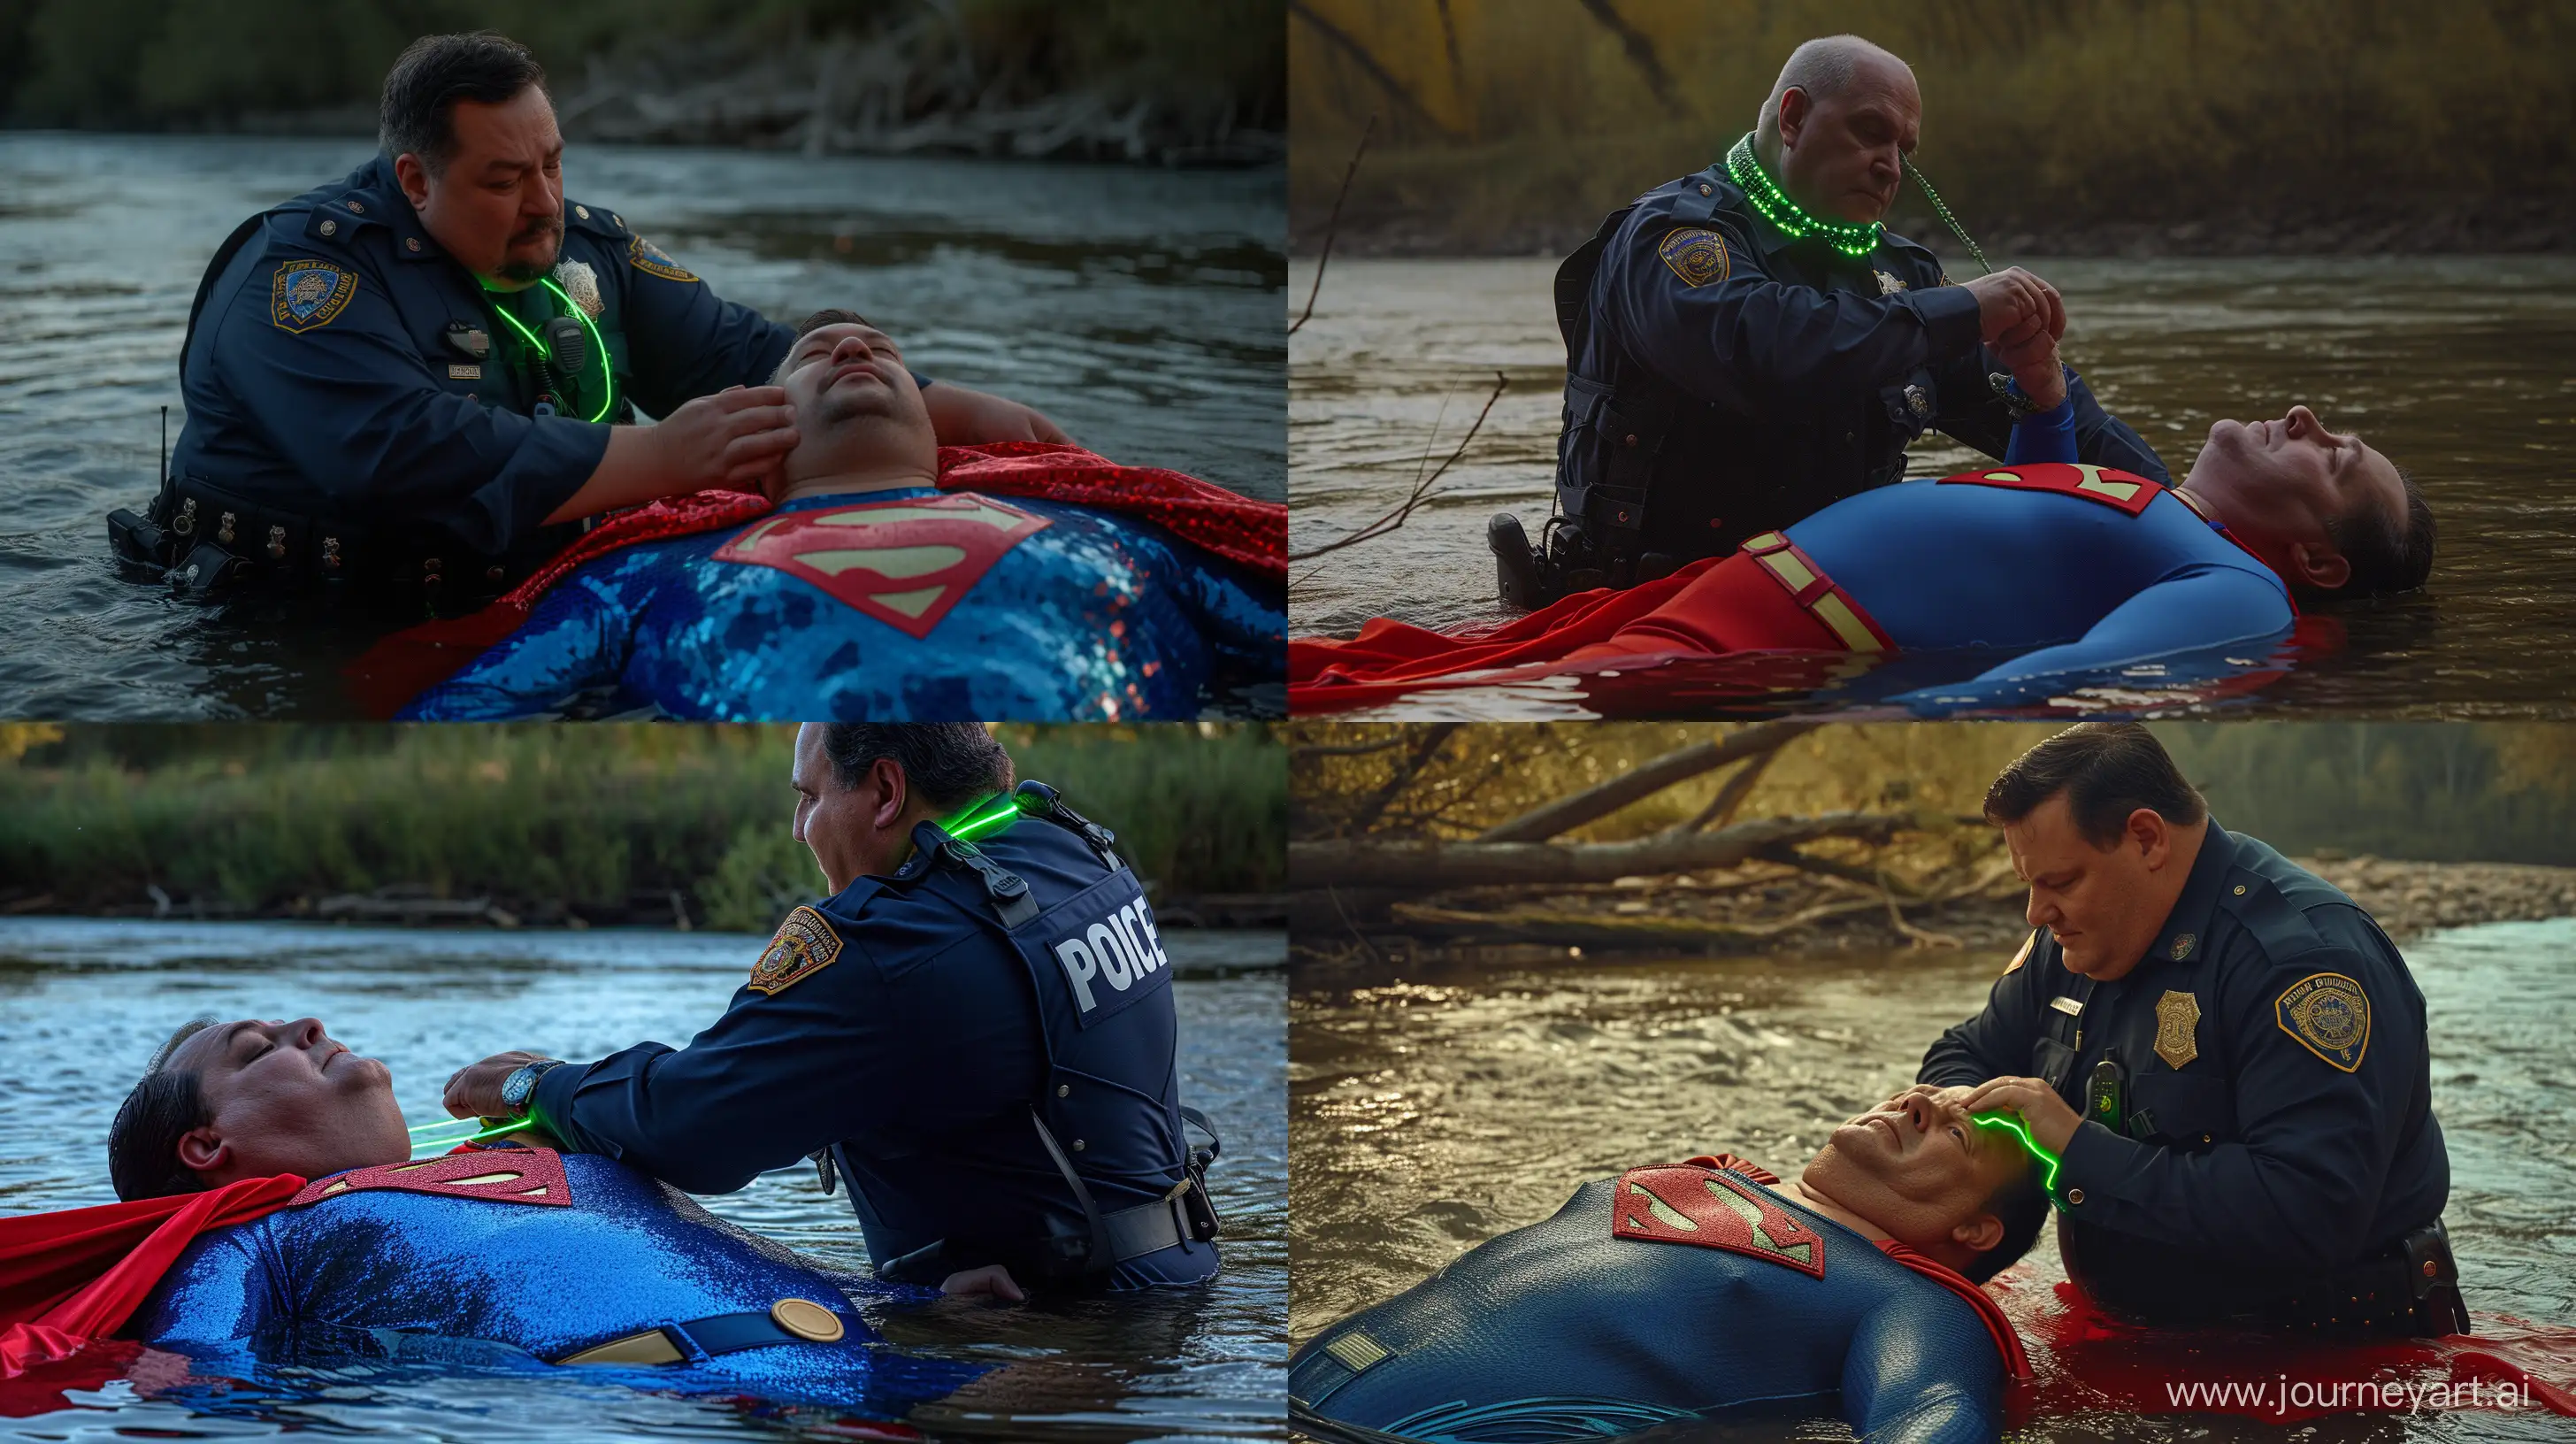 Elderly-Superman-Submerged-Unique-Scene-of-a-60YearOld-Man-in-Neon-Dog-Collar